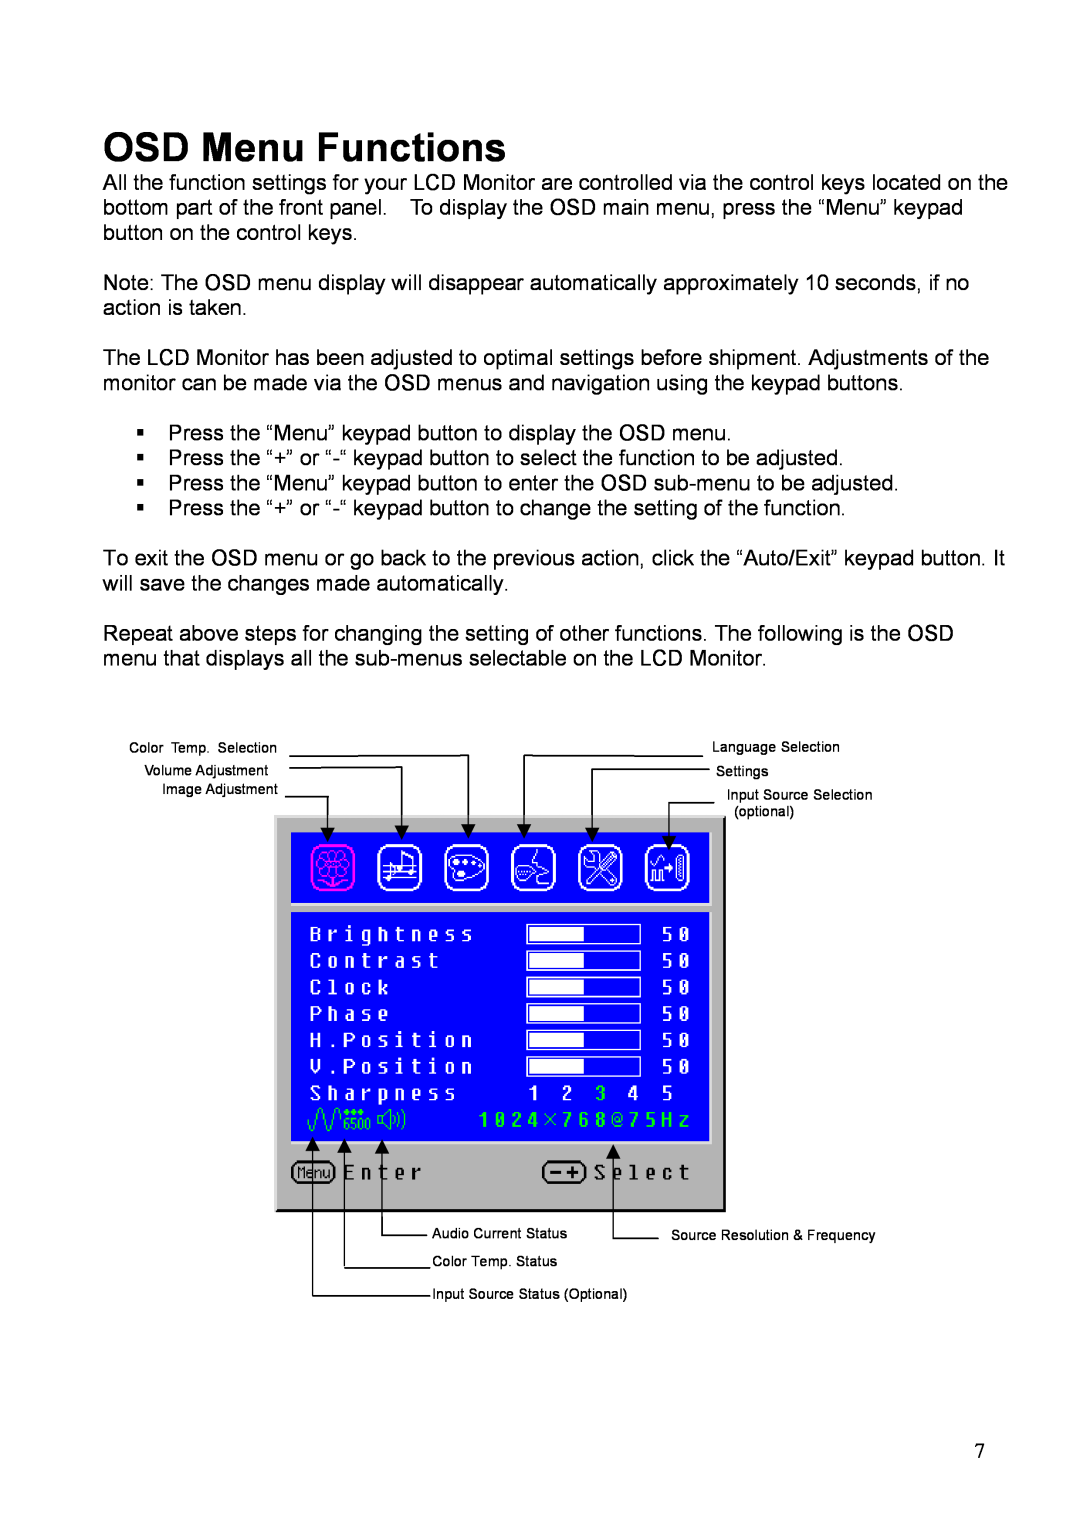 Westinghouse LCM-17v2 manual OSD Menu Functions 